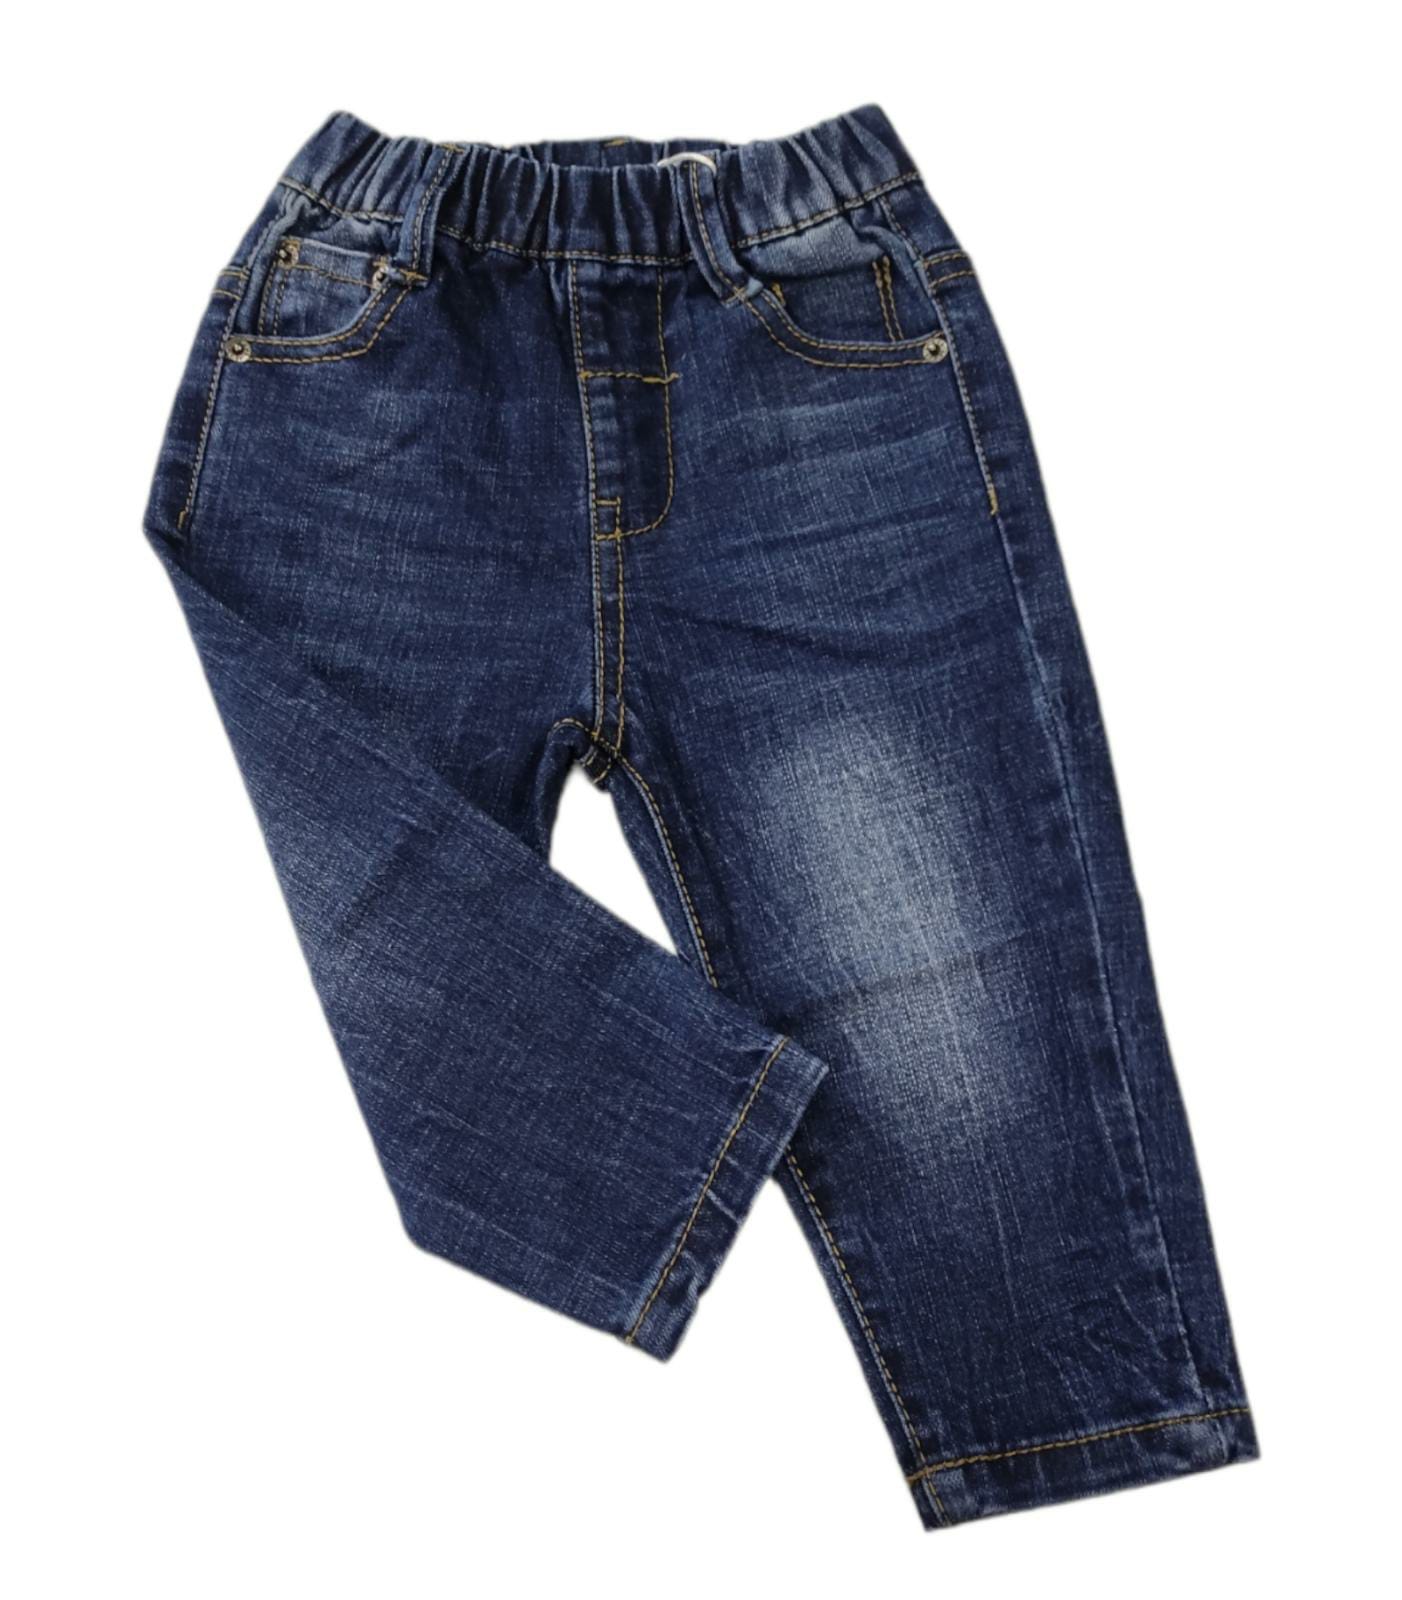 Dark Denim Stretch Jeans for Boys 12-36 Months